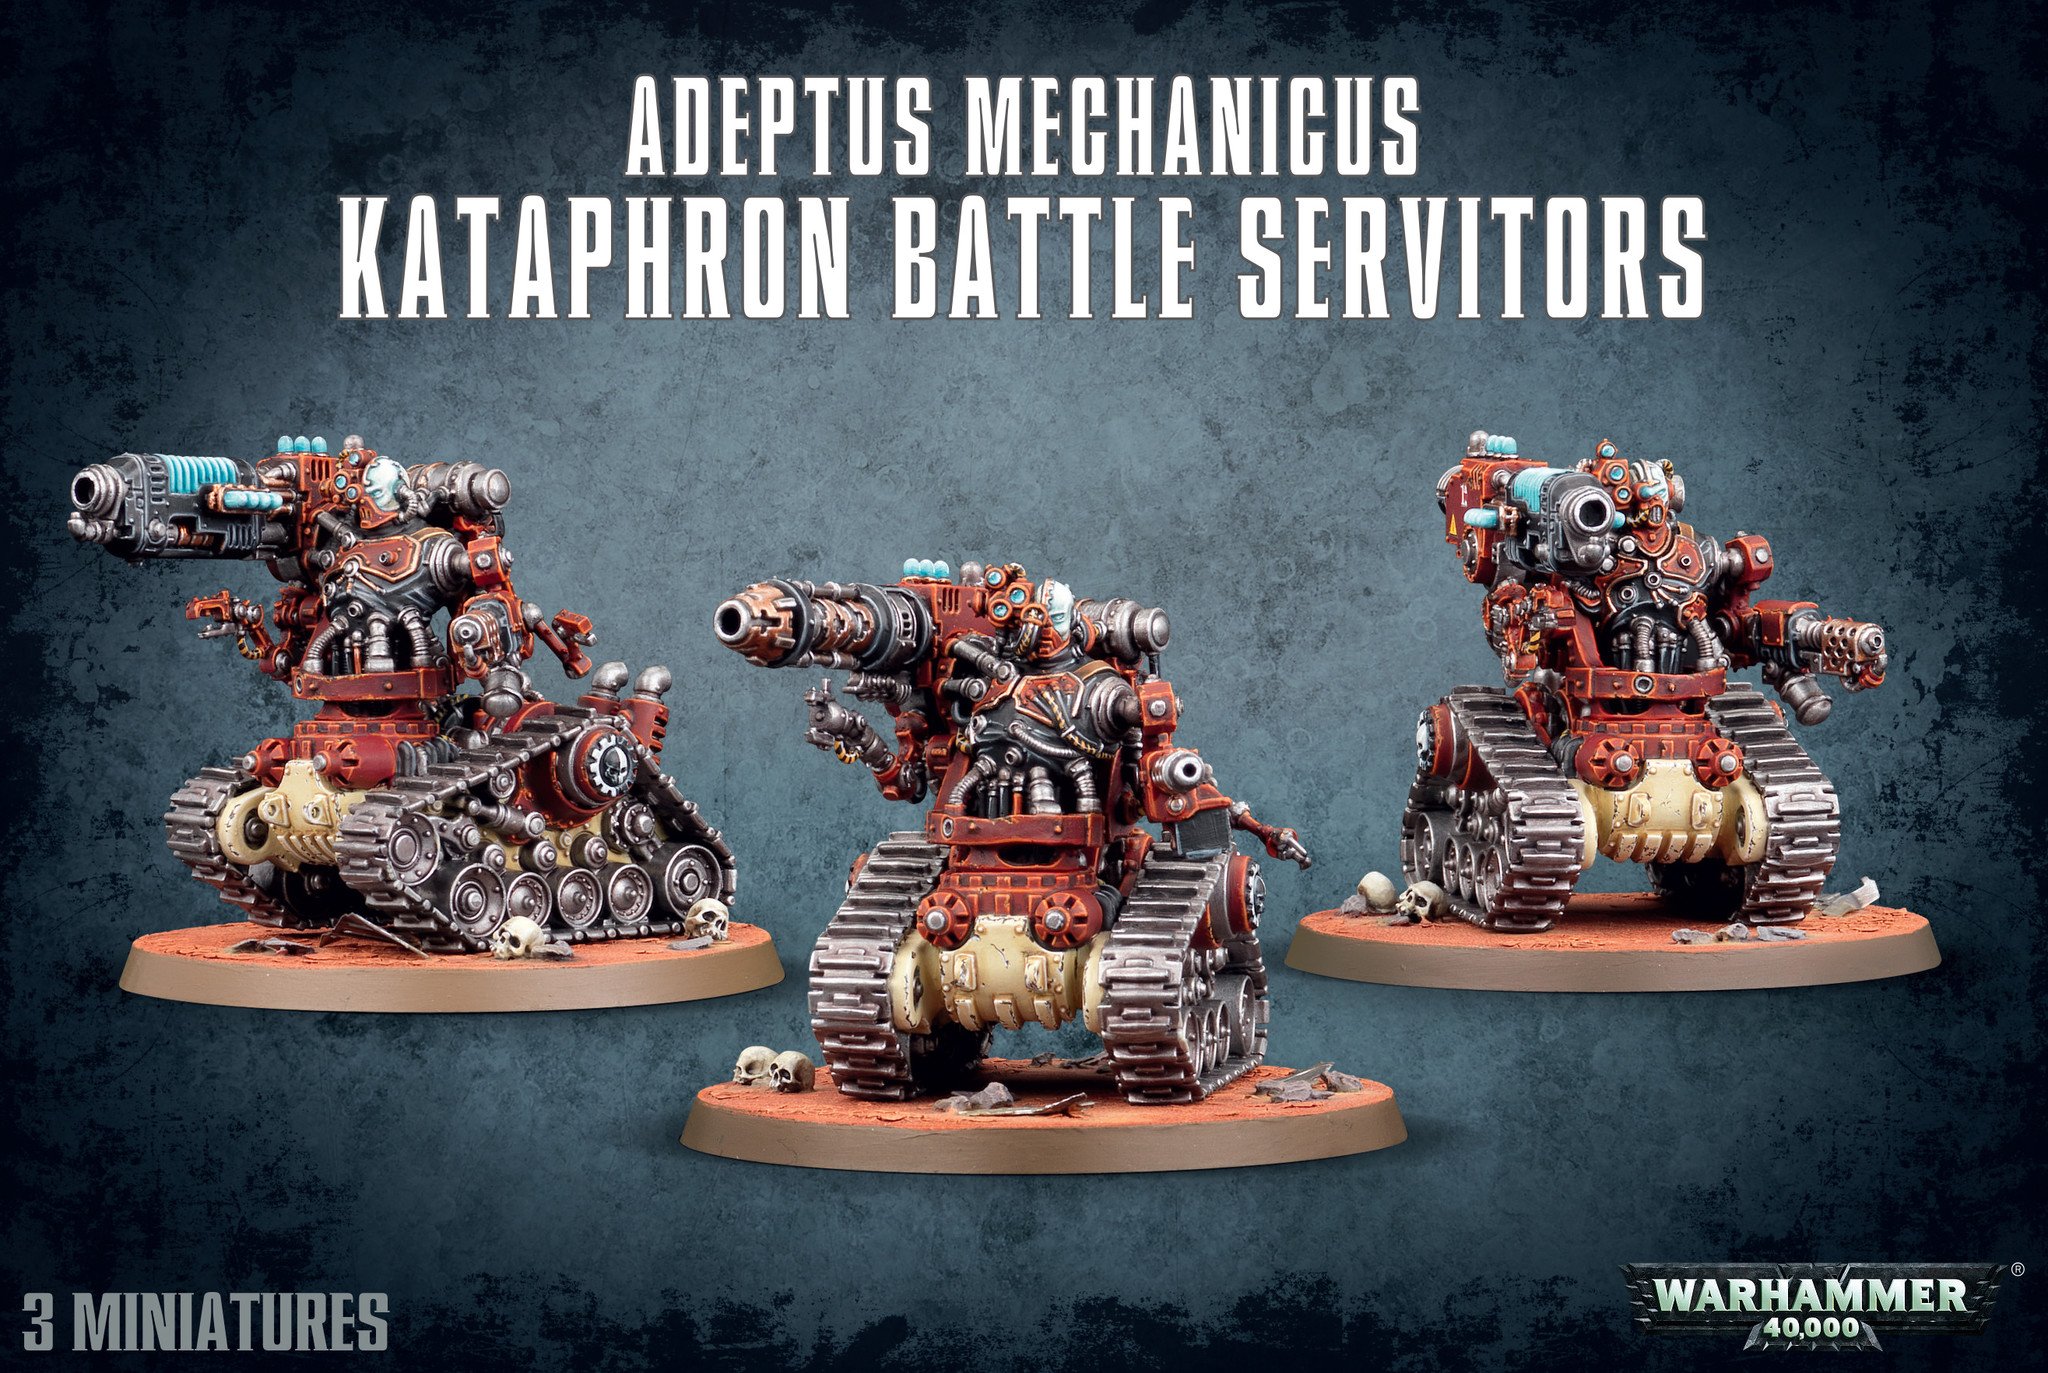 Warhammer 40K Adeptus Mechanicus Kataphron Battle Servitors